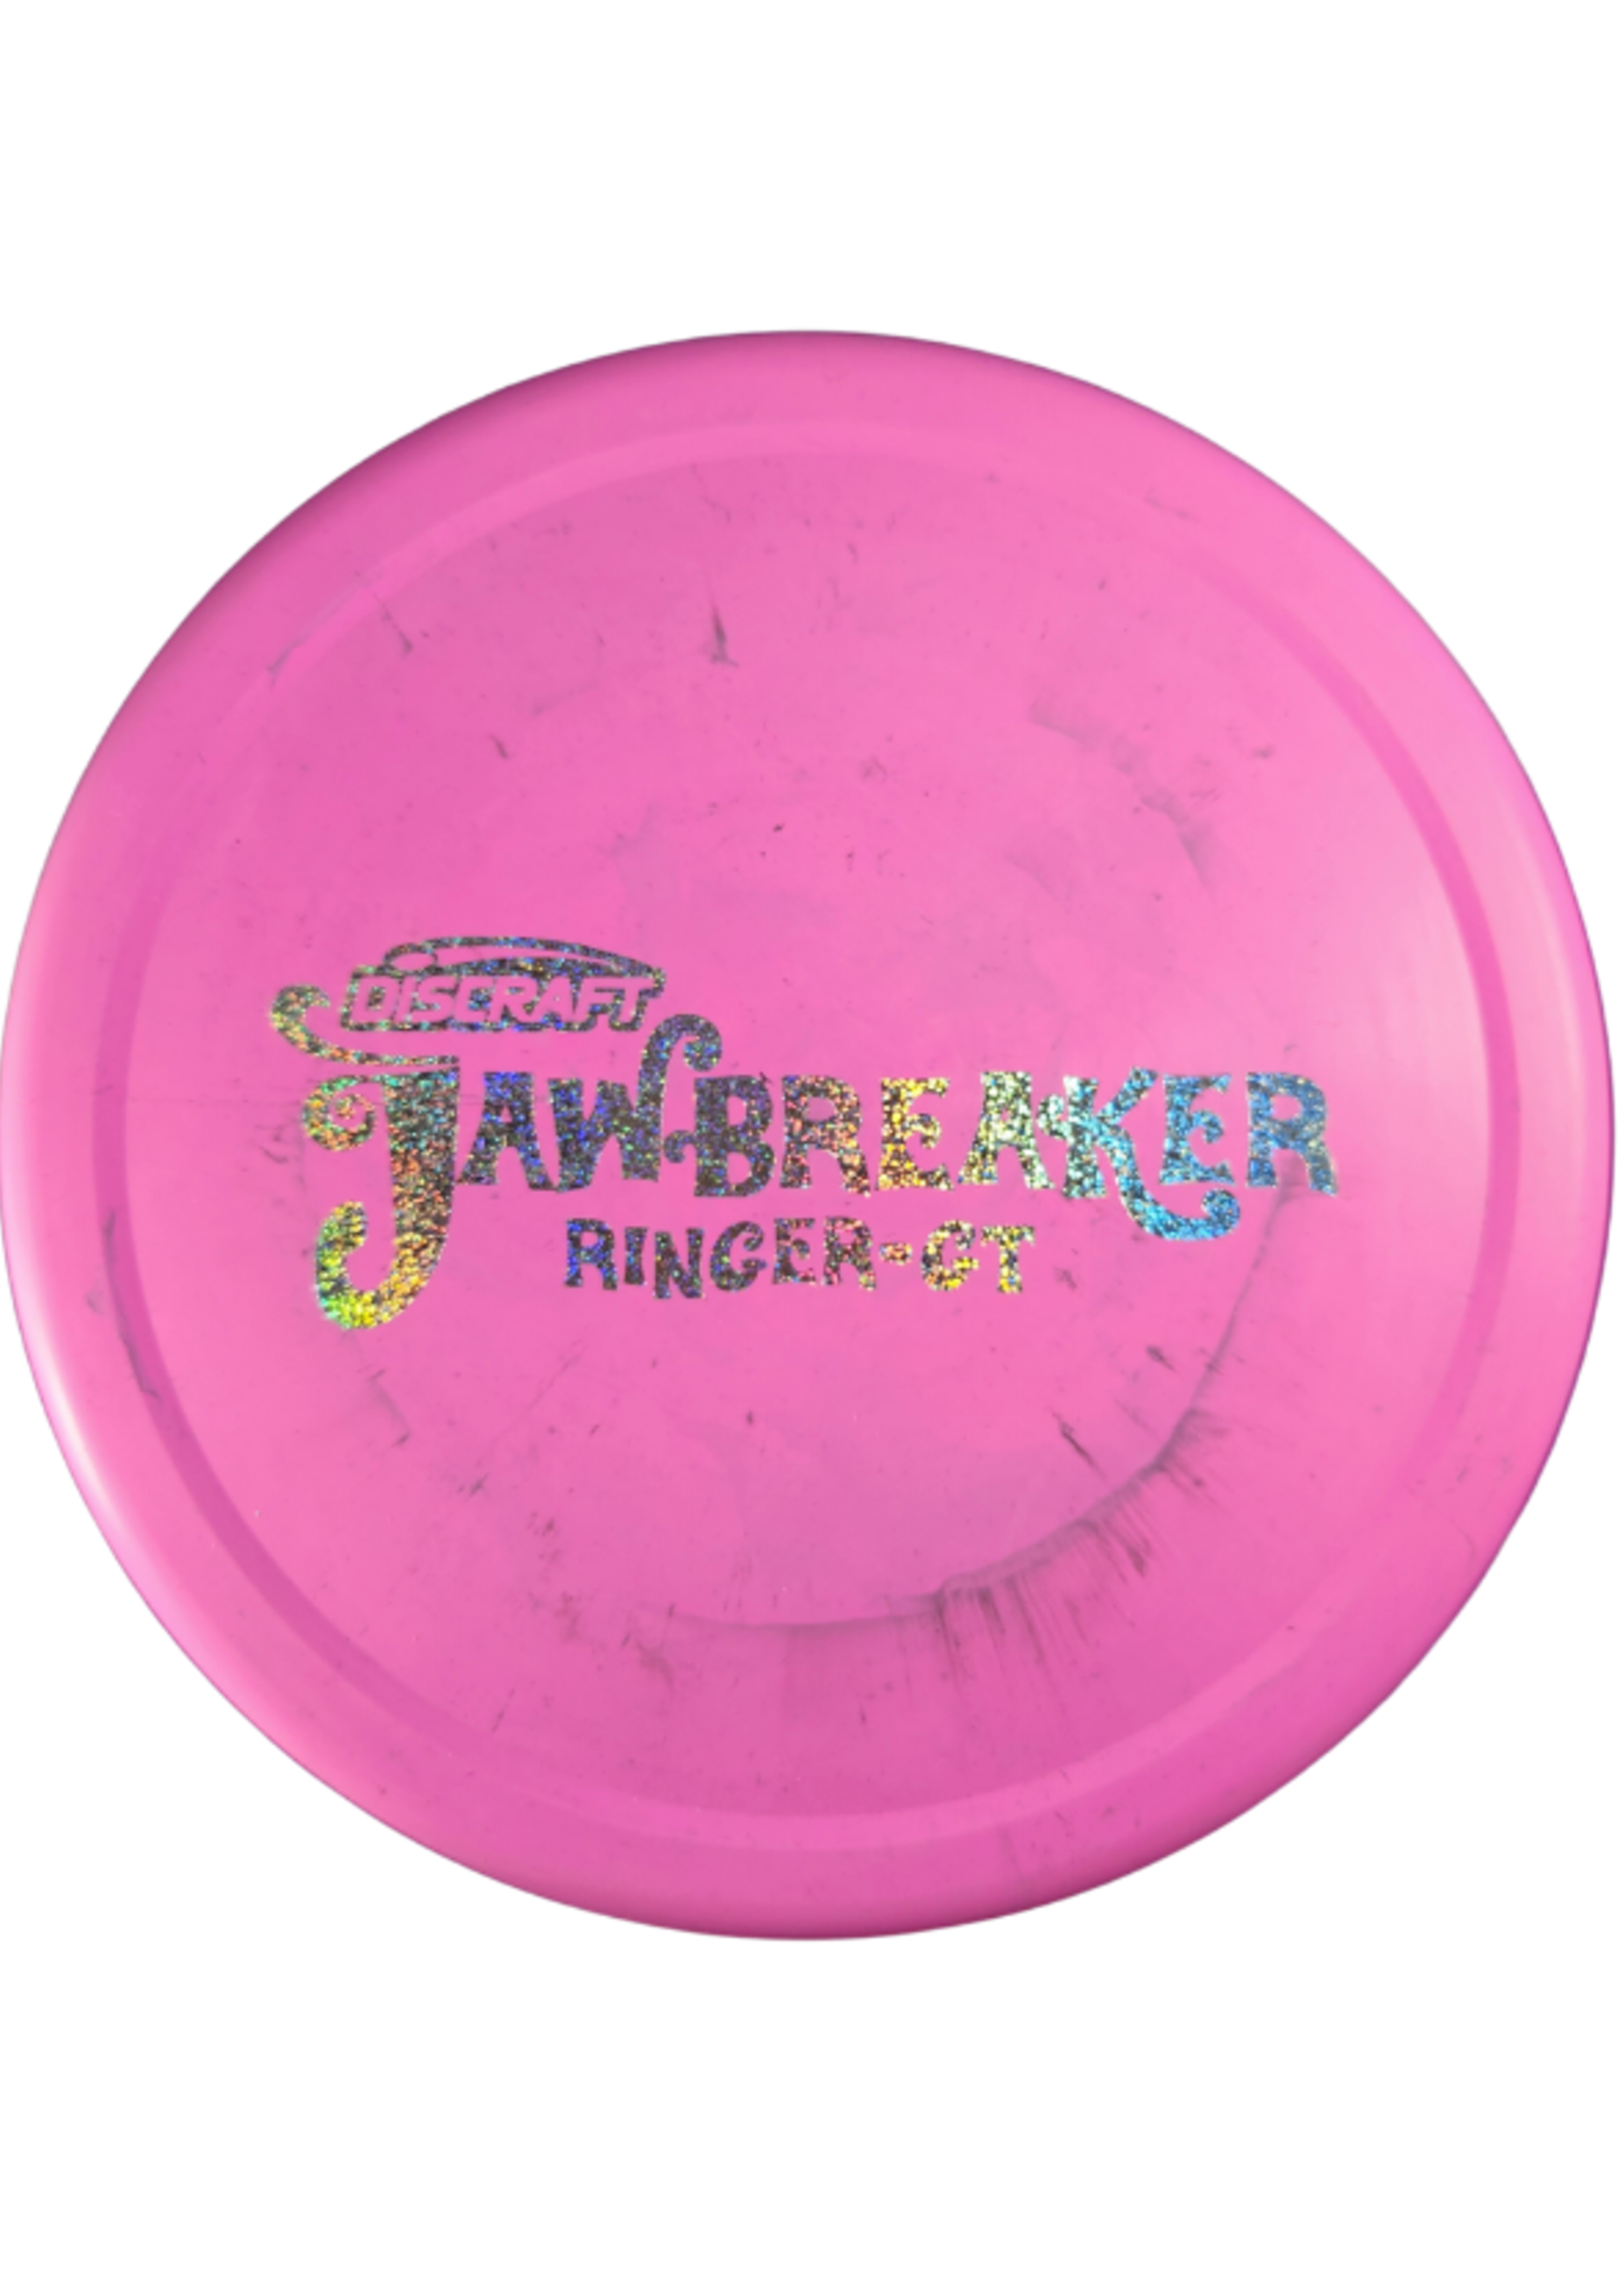 Discraft Discraft Jawbreaker Ringer GT